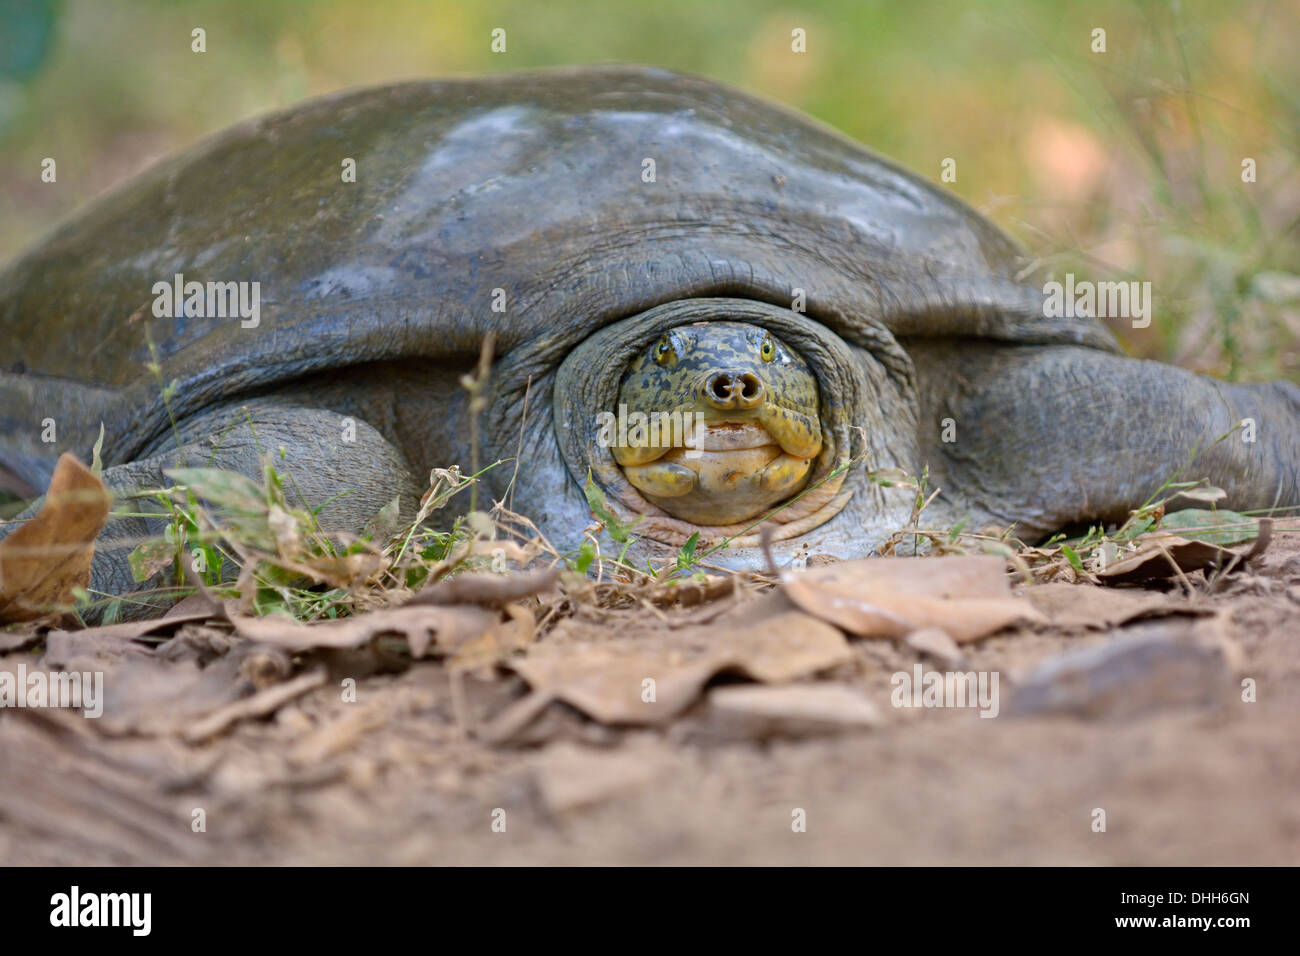 Indian softshell turtle (Nilssonia gangetica) Stock Photo